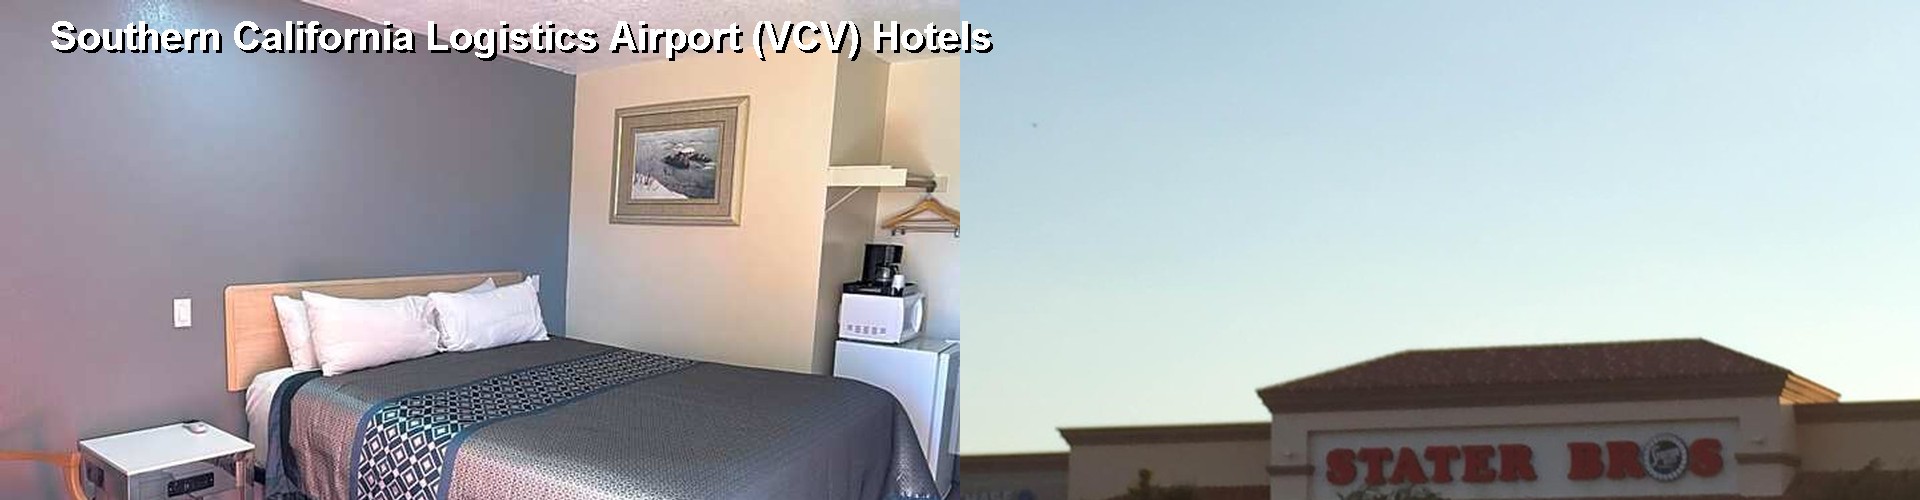 4 Best Hotels near Southern California Logistics Airport (VCV)